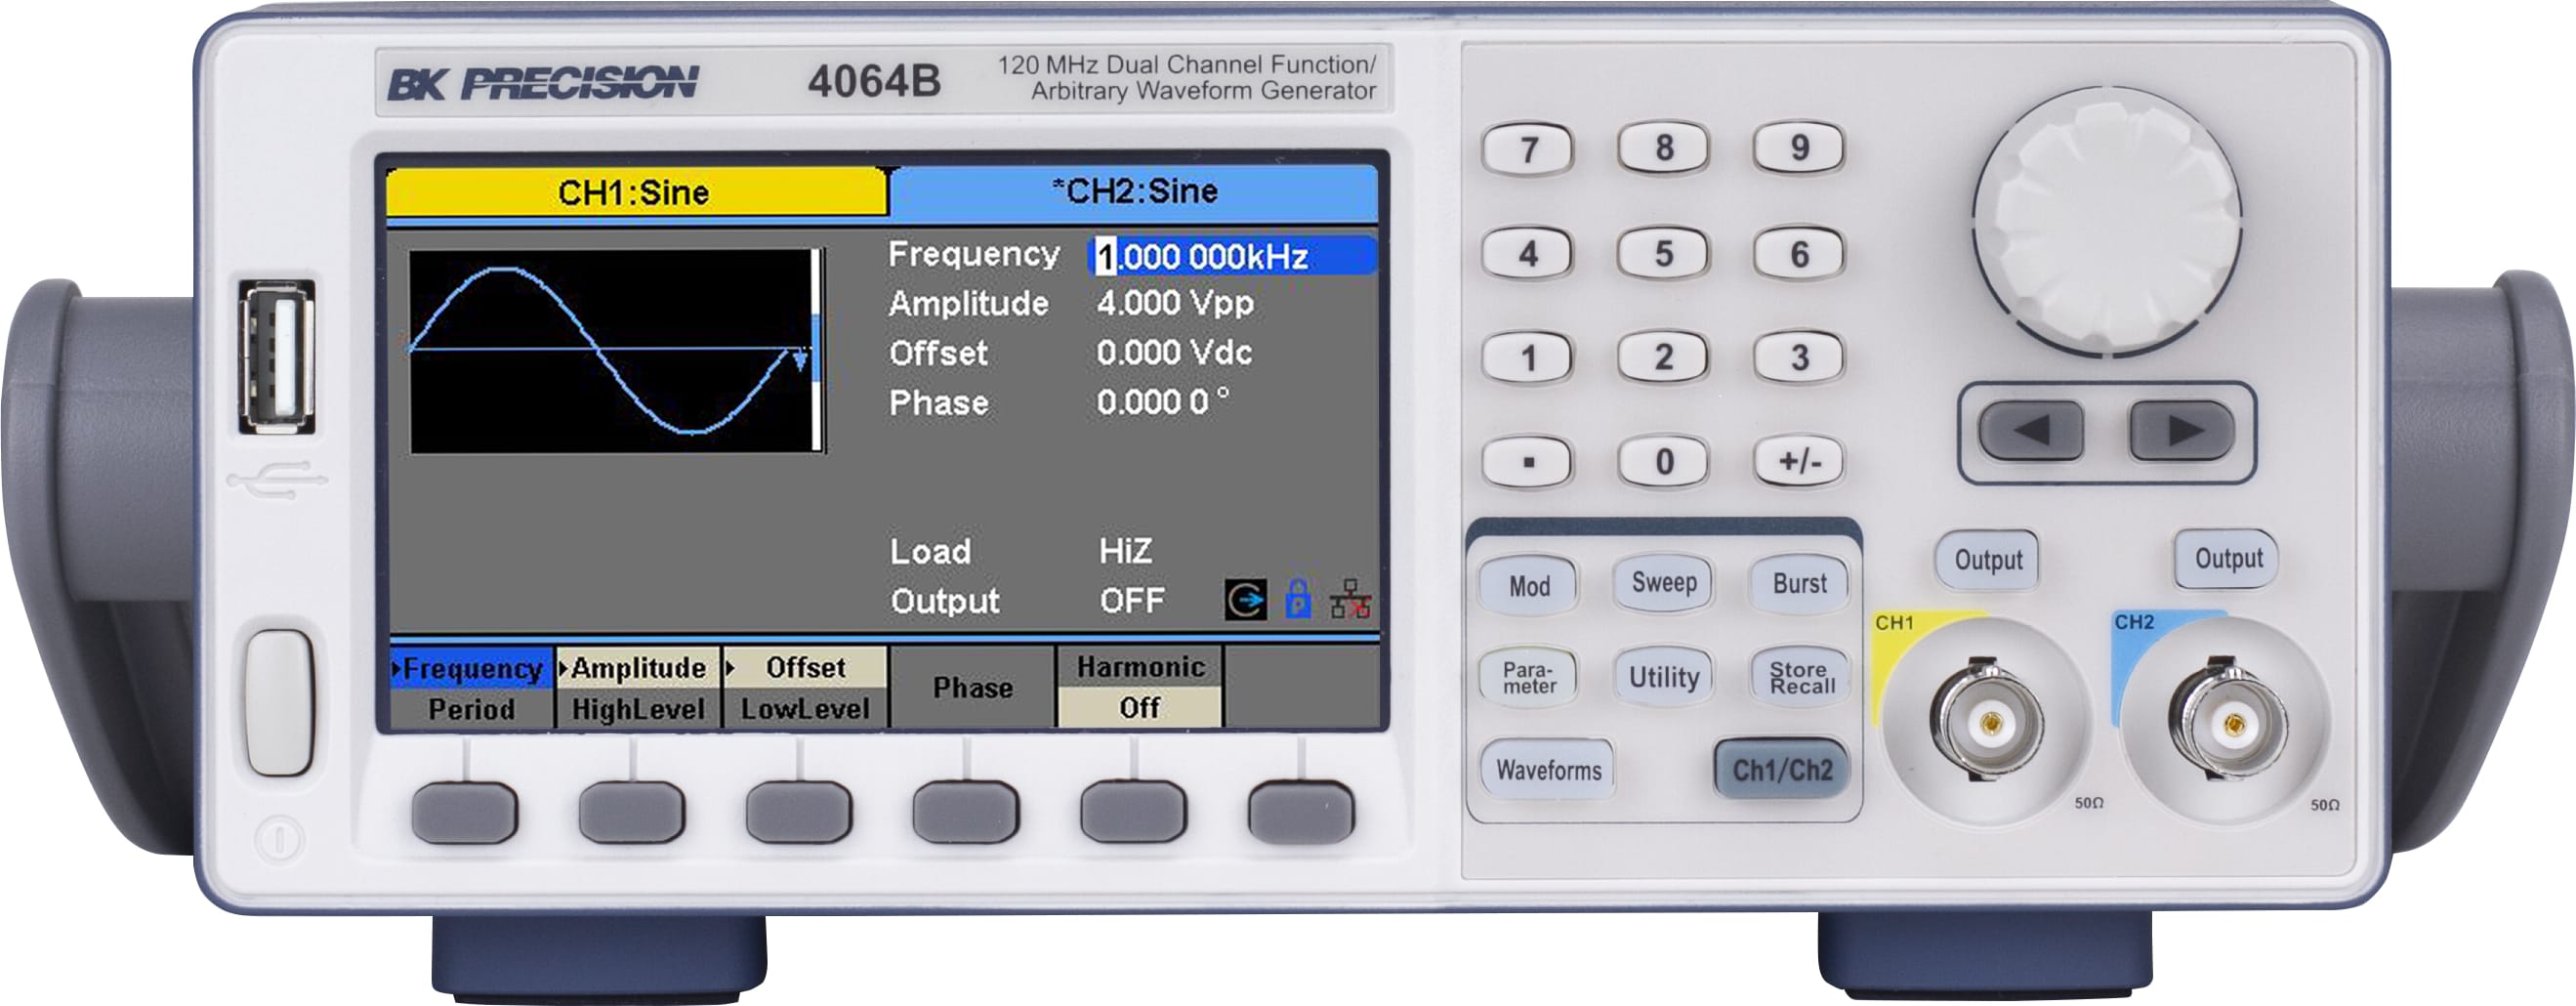 BK 4064 Dual Channel Function/Arbitrary Waveform Generator - 120MHz